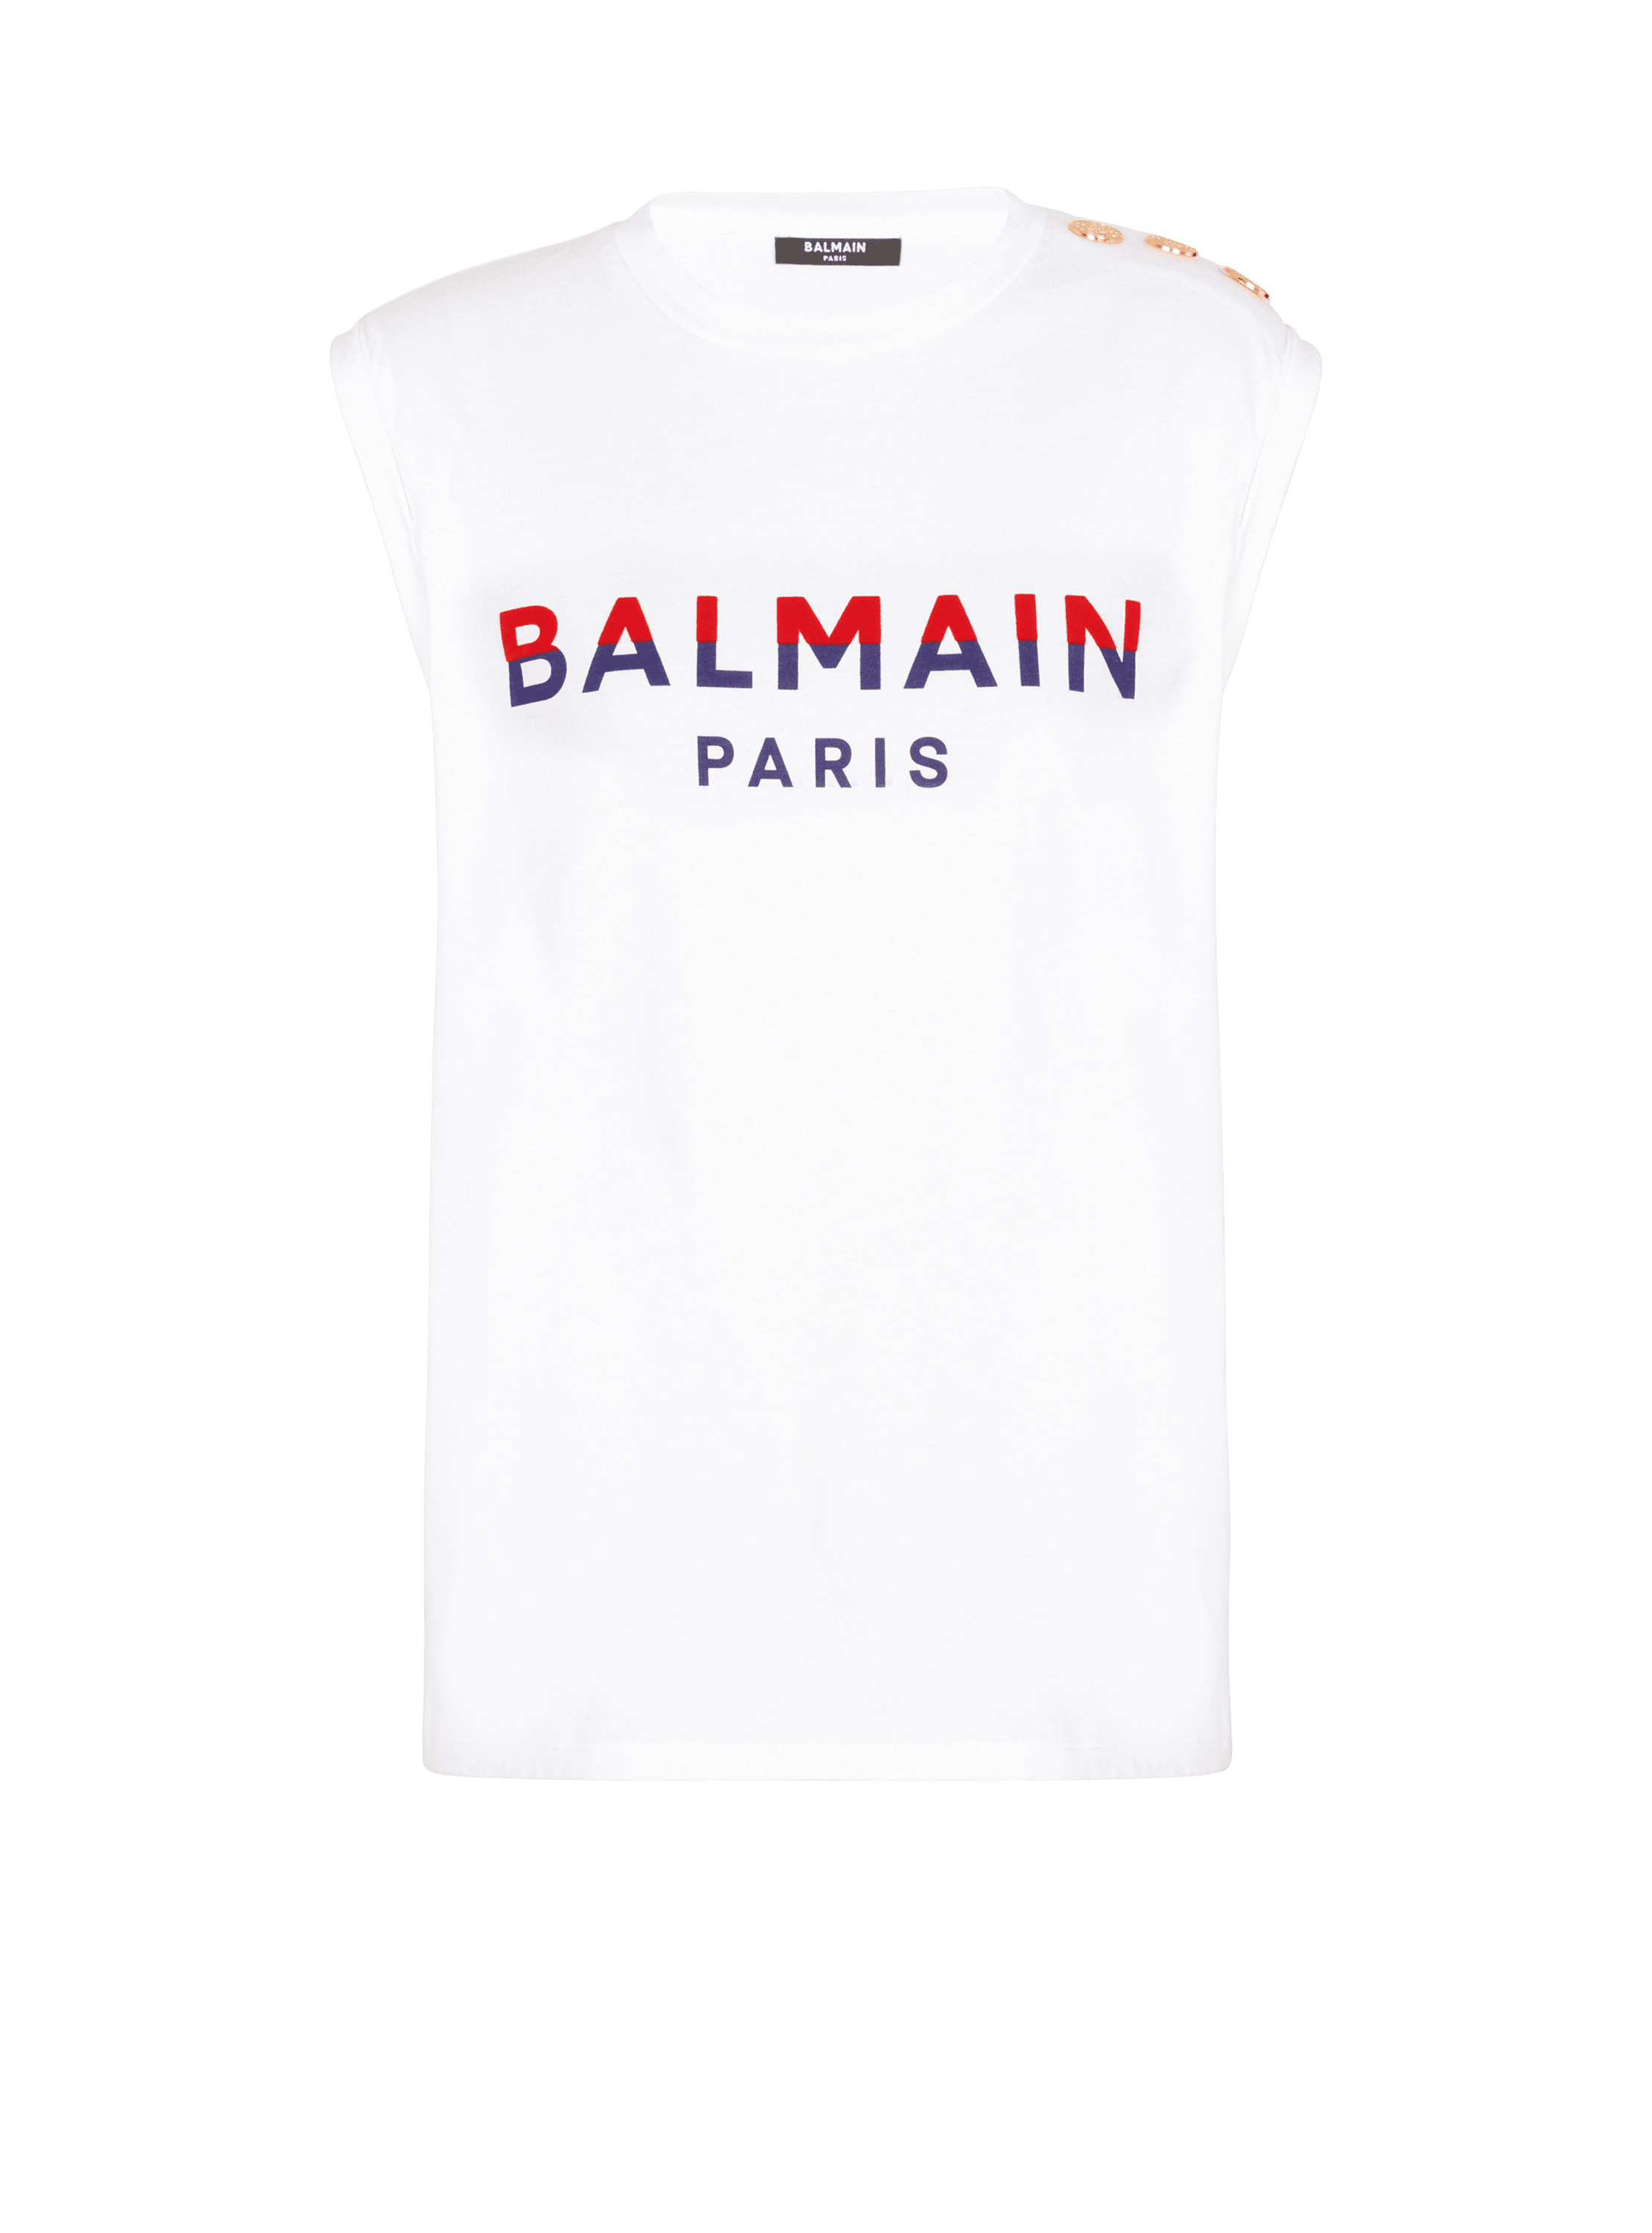 Beflocktes Balmain Shirt WeiB - Damen BALMAIN